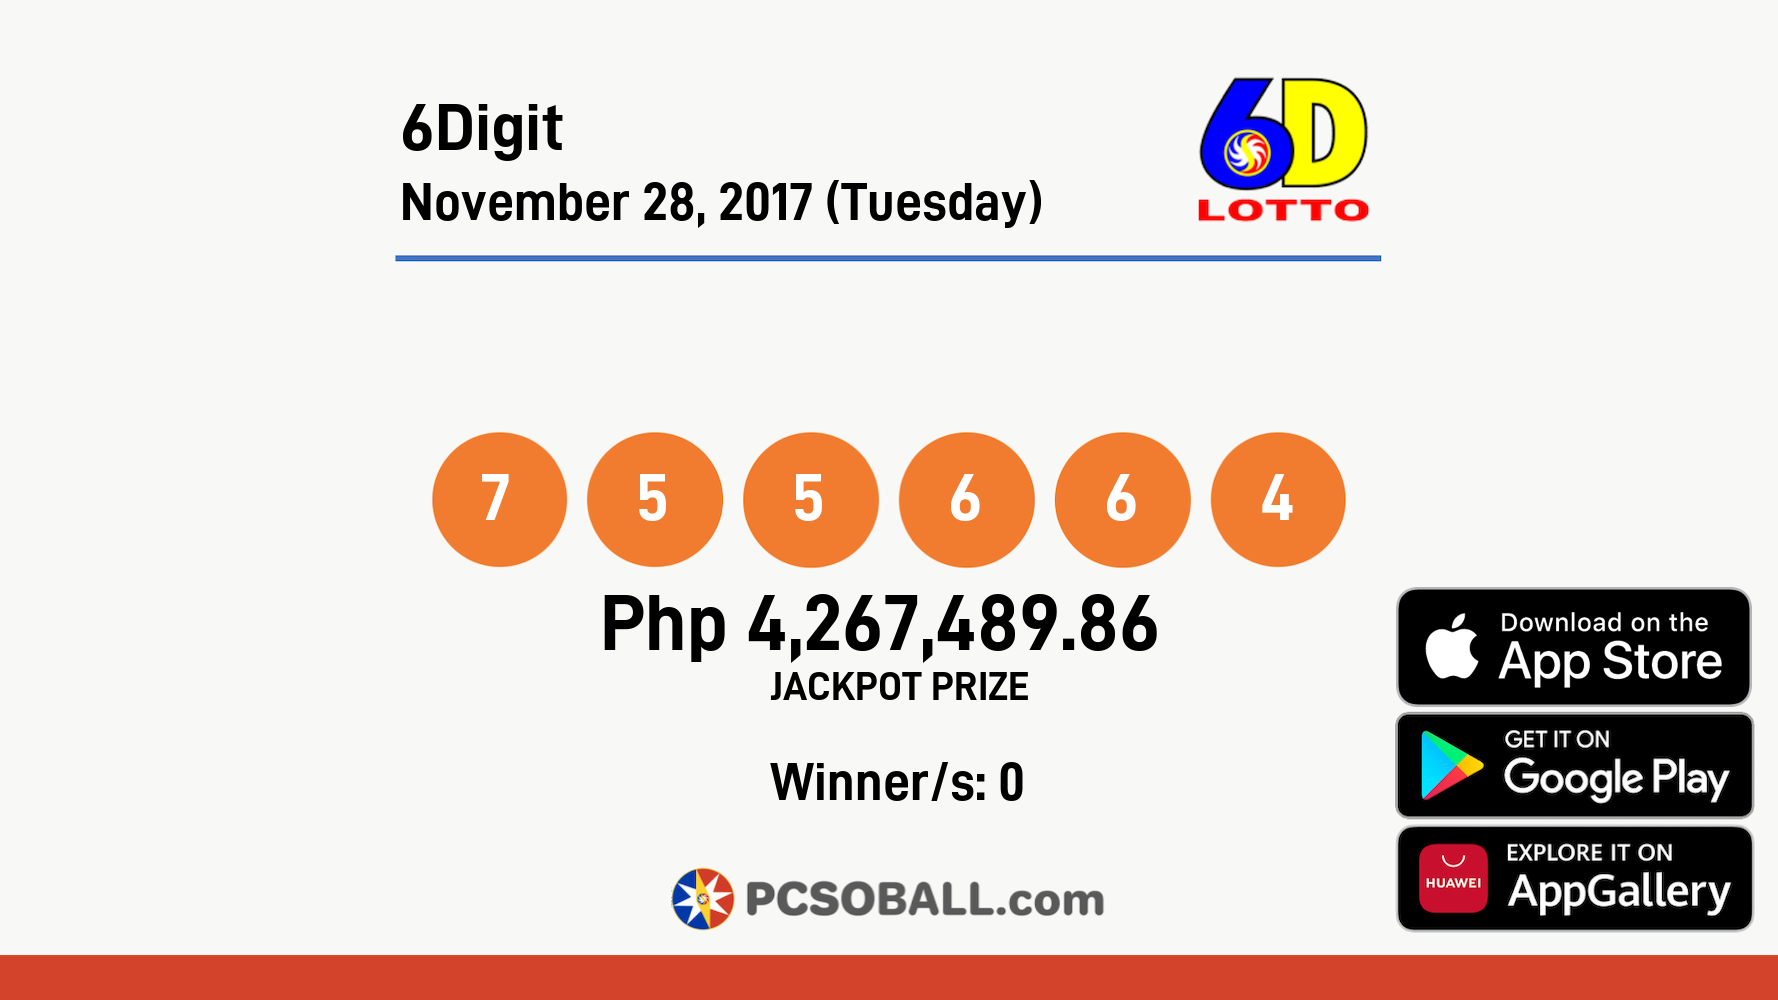 6Digit November 28, 2017 (Tuesday) Result